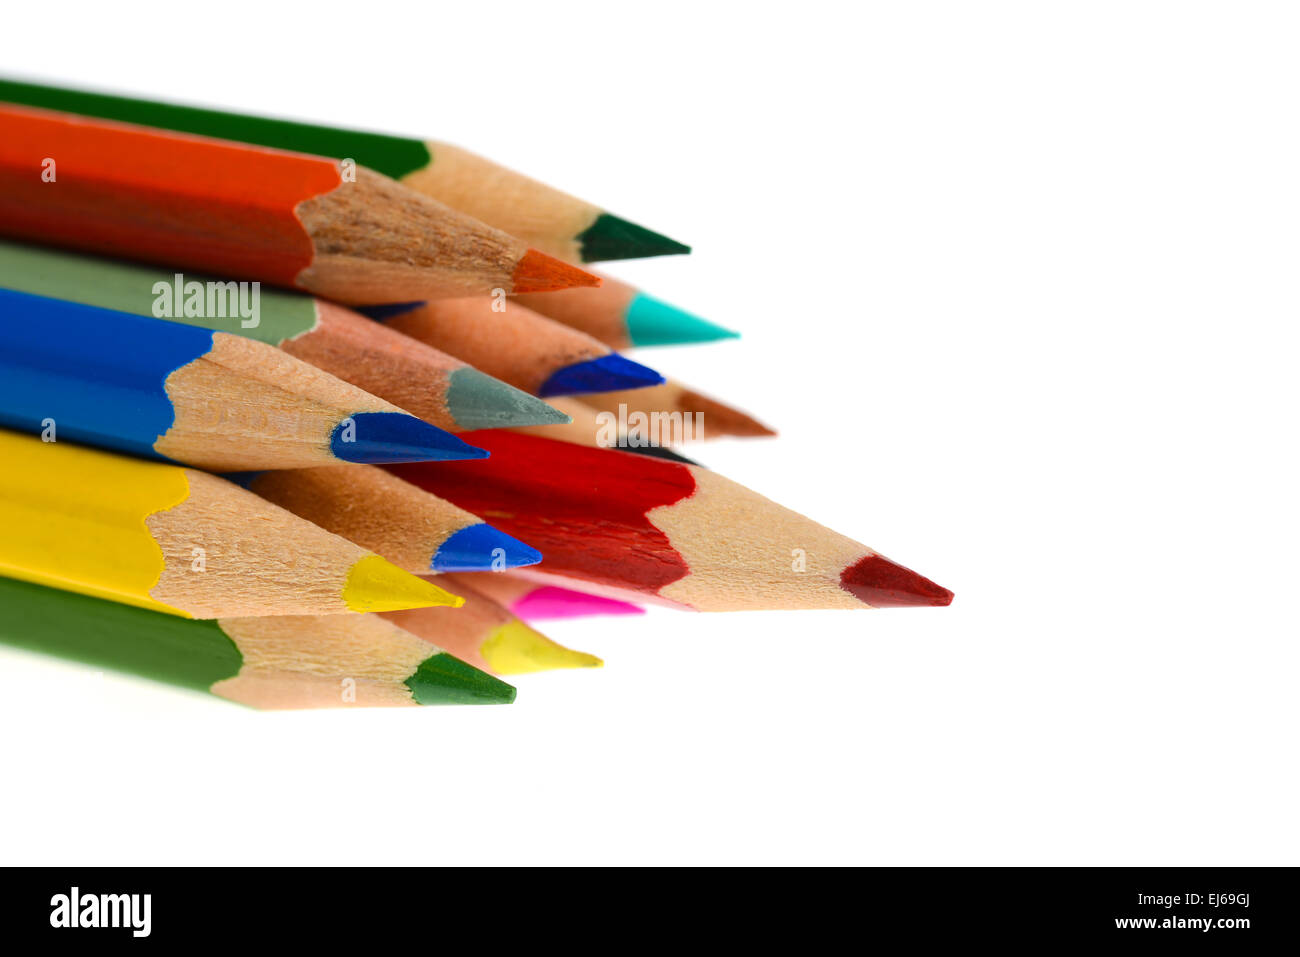 Grupo de lápices de colores aislados en fondo blanco. Foto de stock